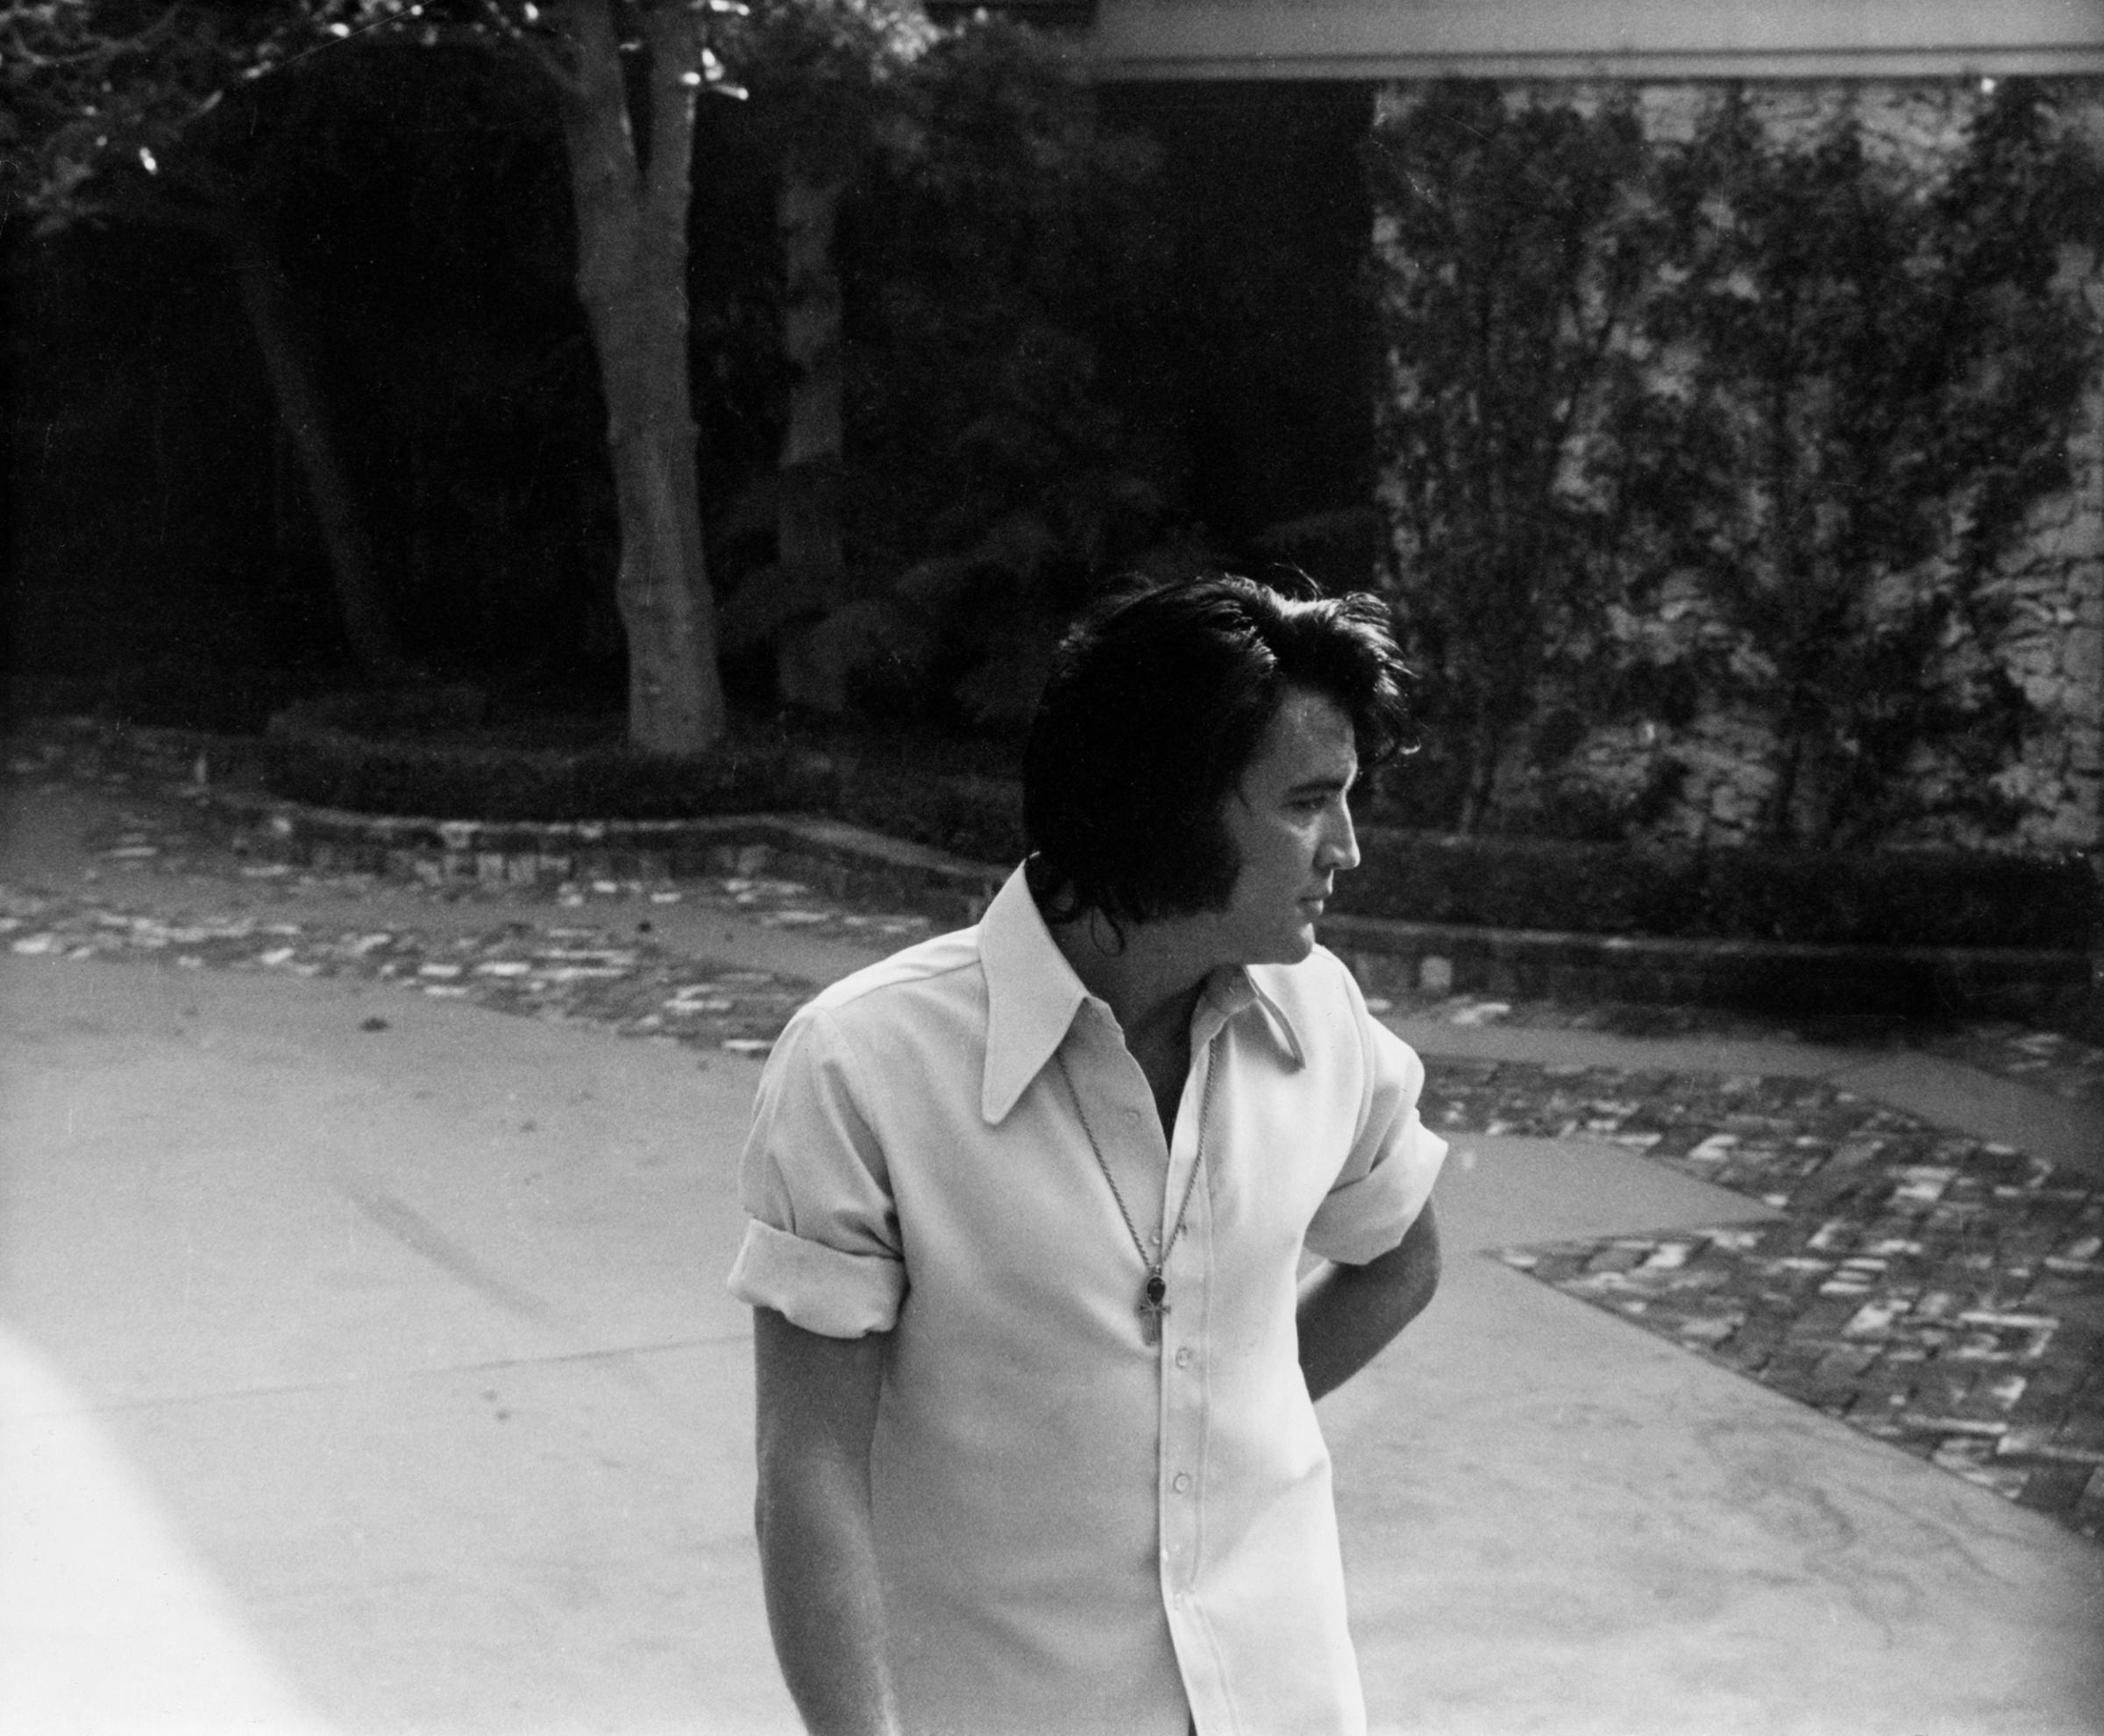 Elvis Presley in his driveway at Graceland, circa 1970's.